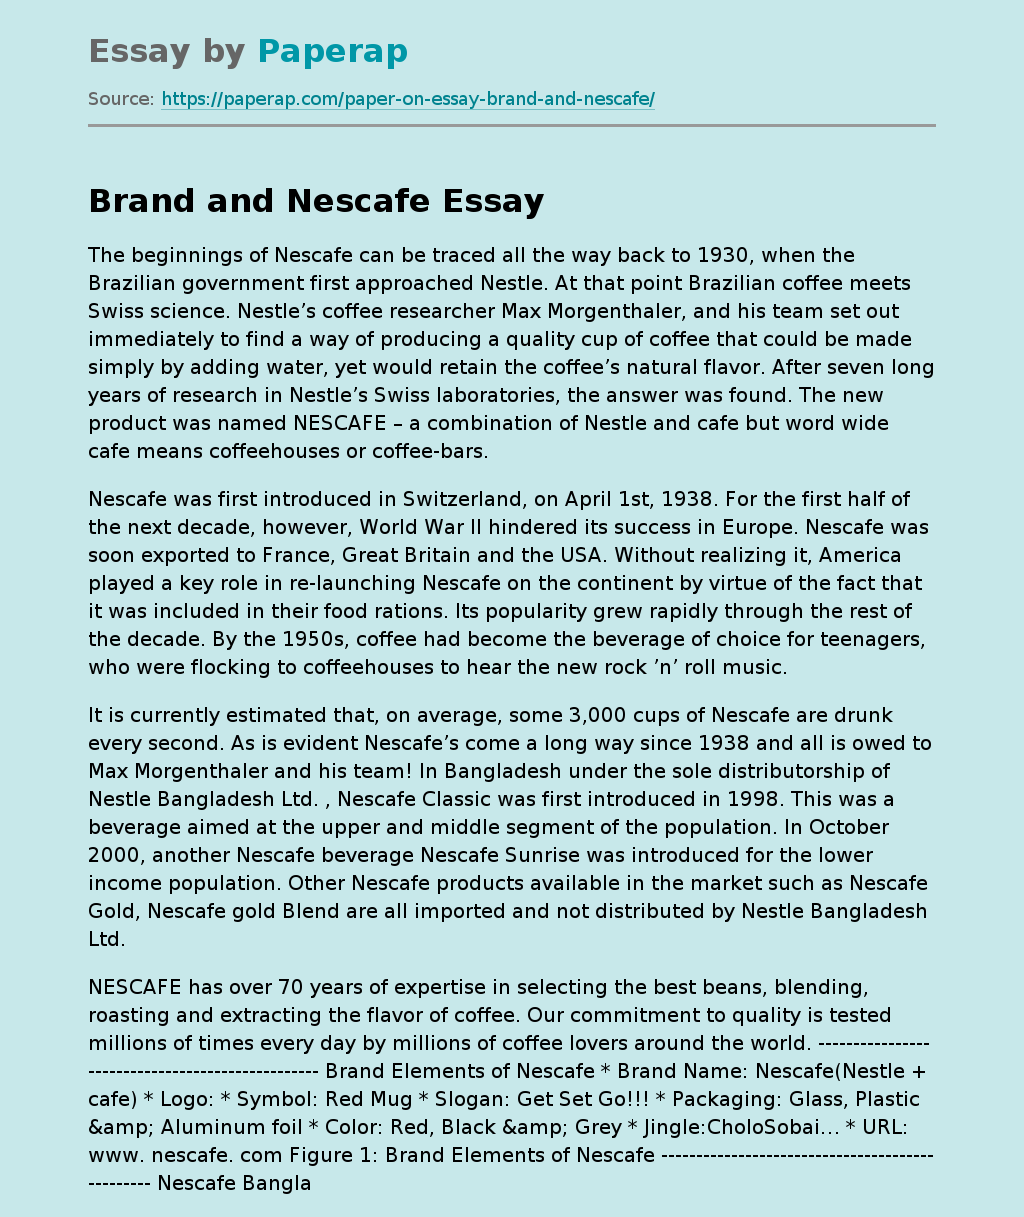 Brand and Nescafe